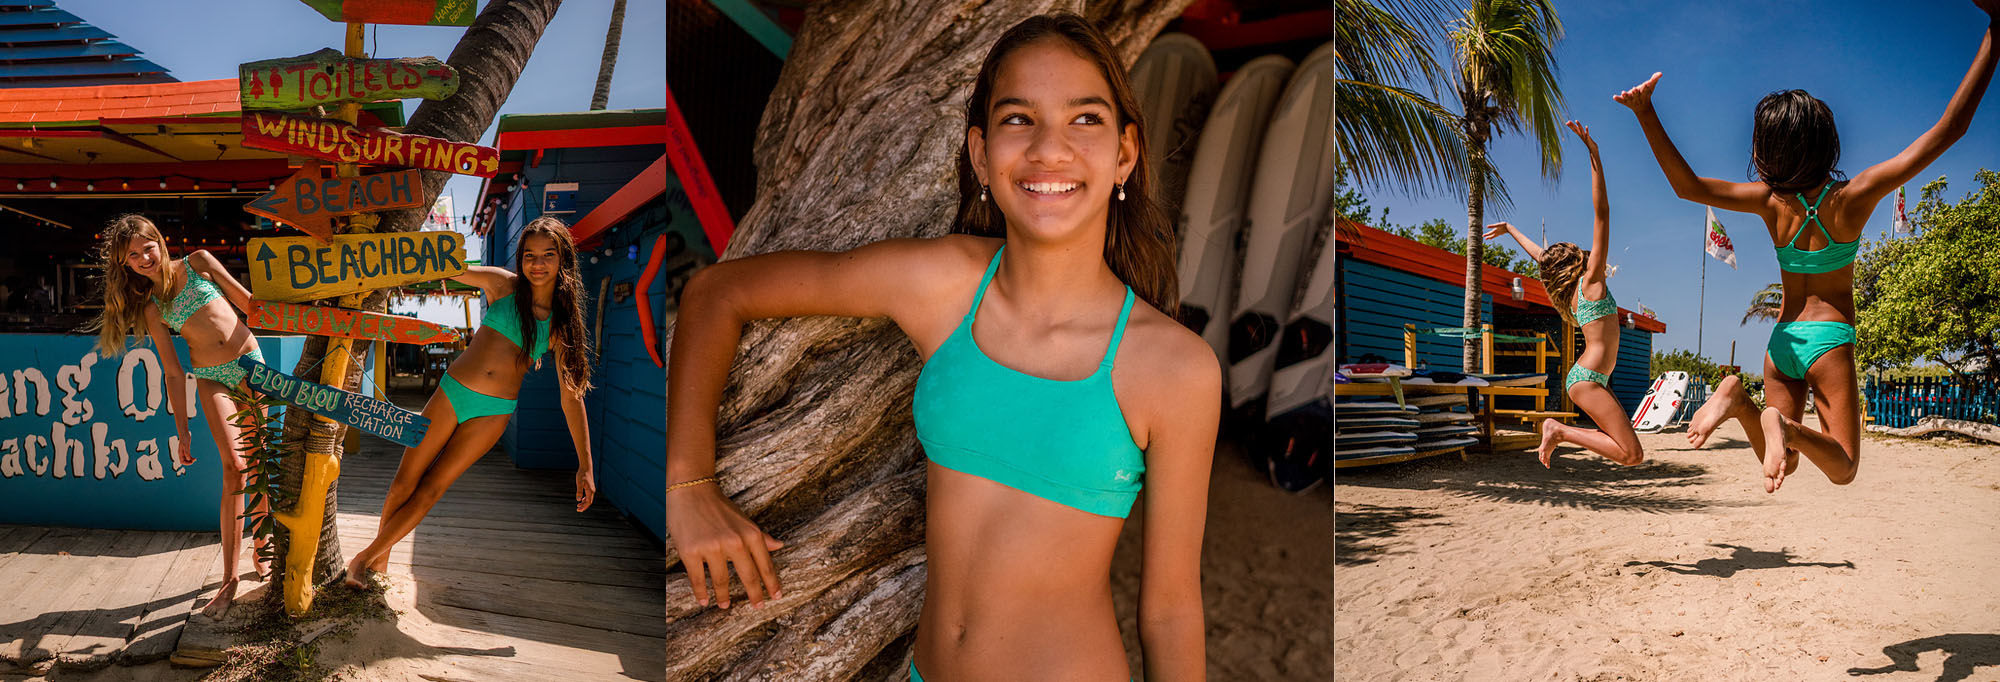 A girl is playing on the beach and enjoying the sun, wearing a green bikini from Brunotti.